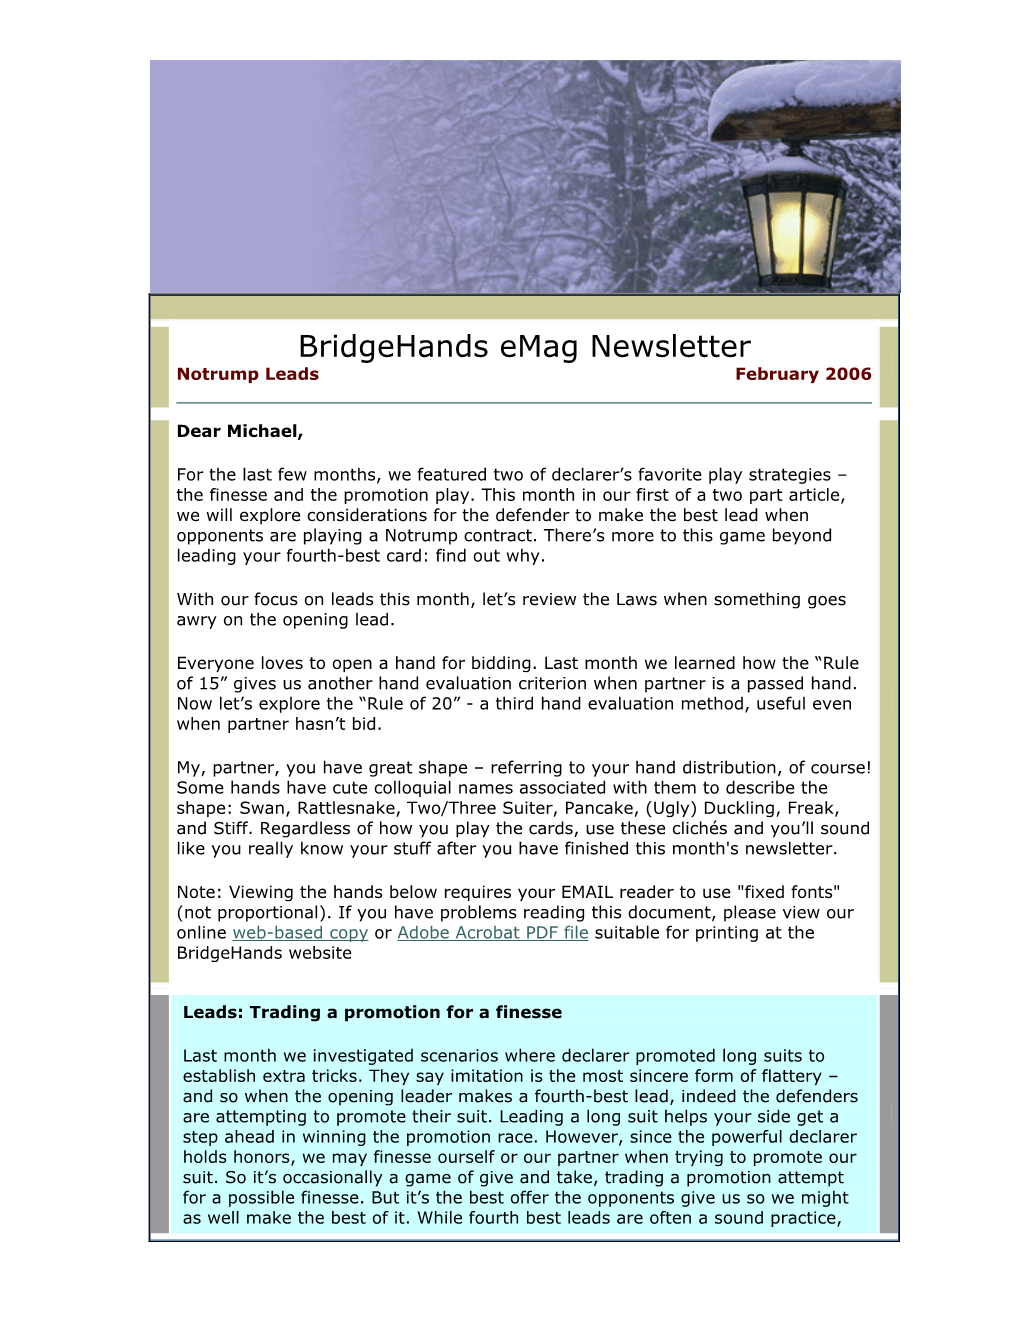 Bridgehands Emag Newsletter Notrump Leads February 2006